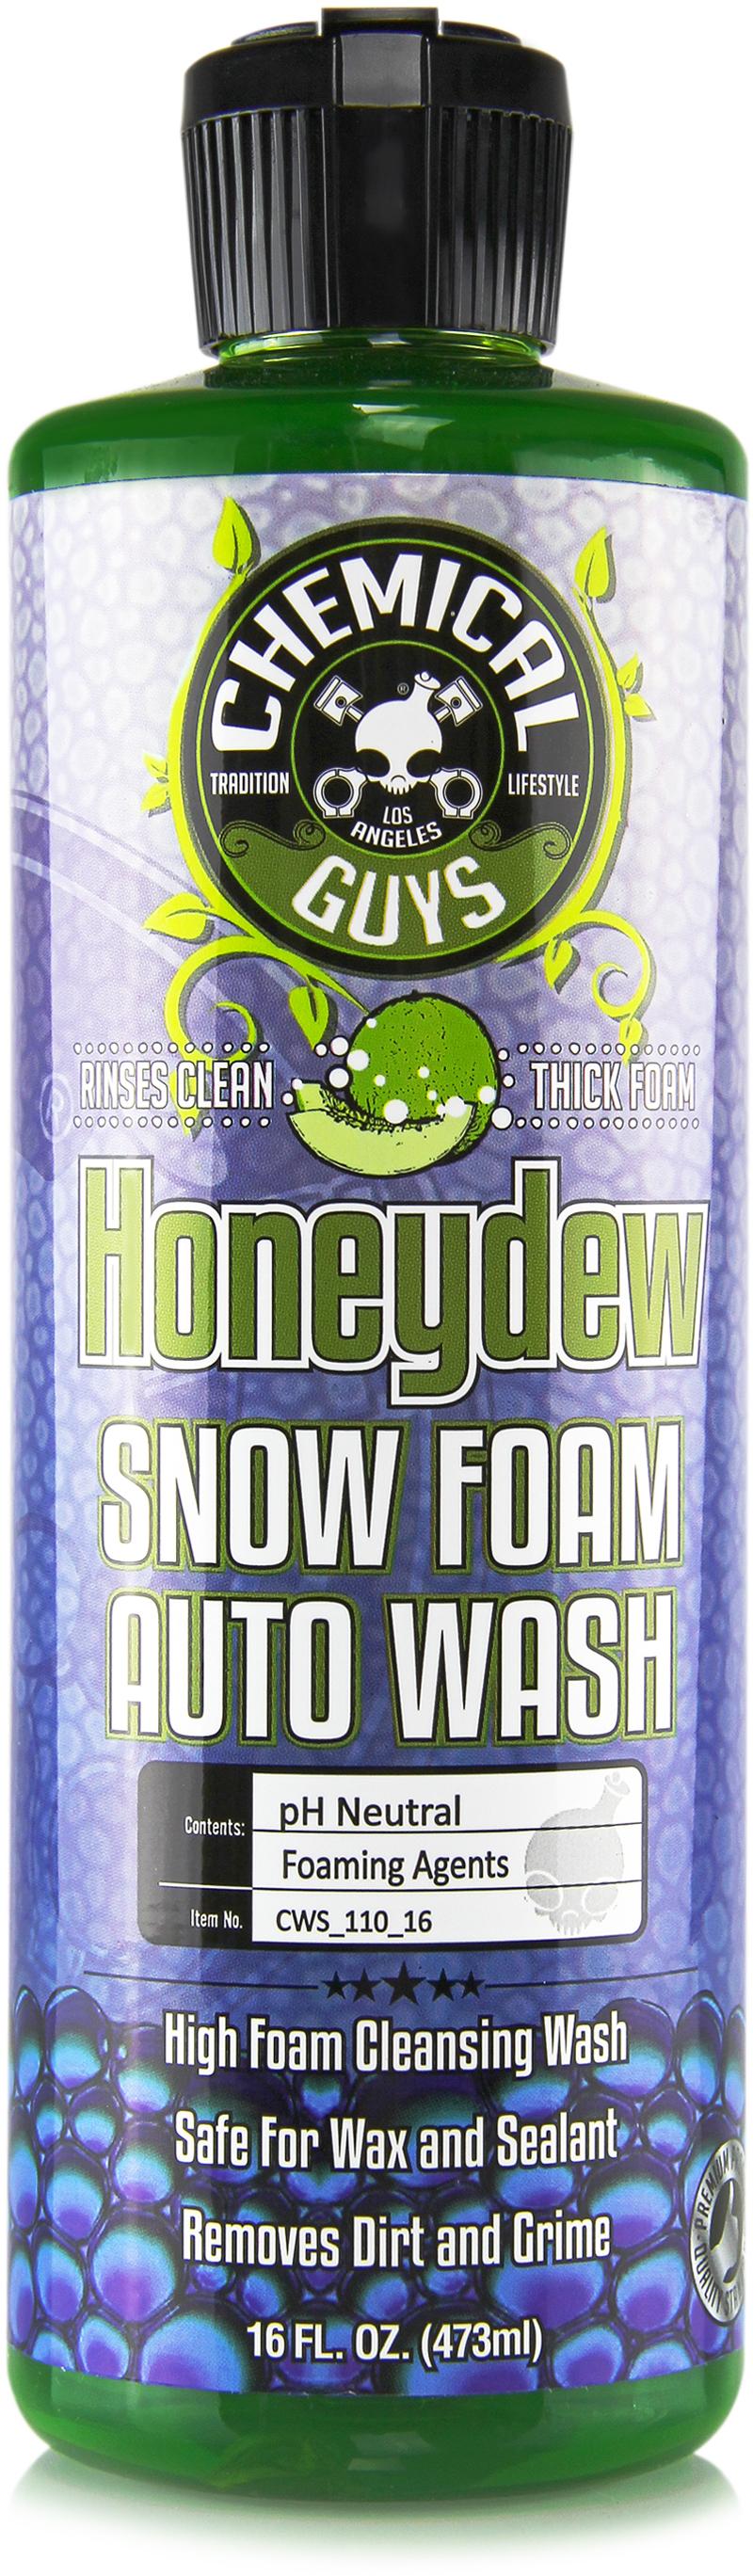 Chemical Guys Honeydew Snow Foam